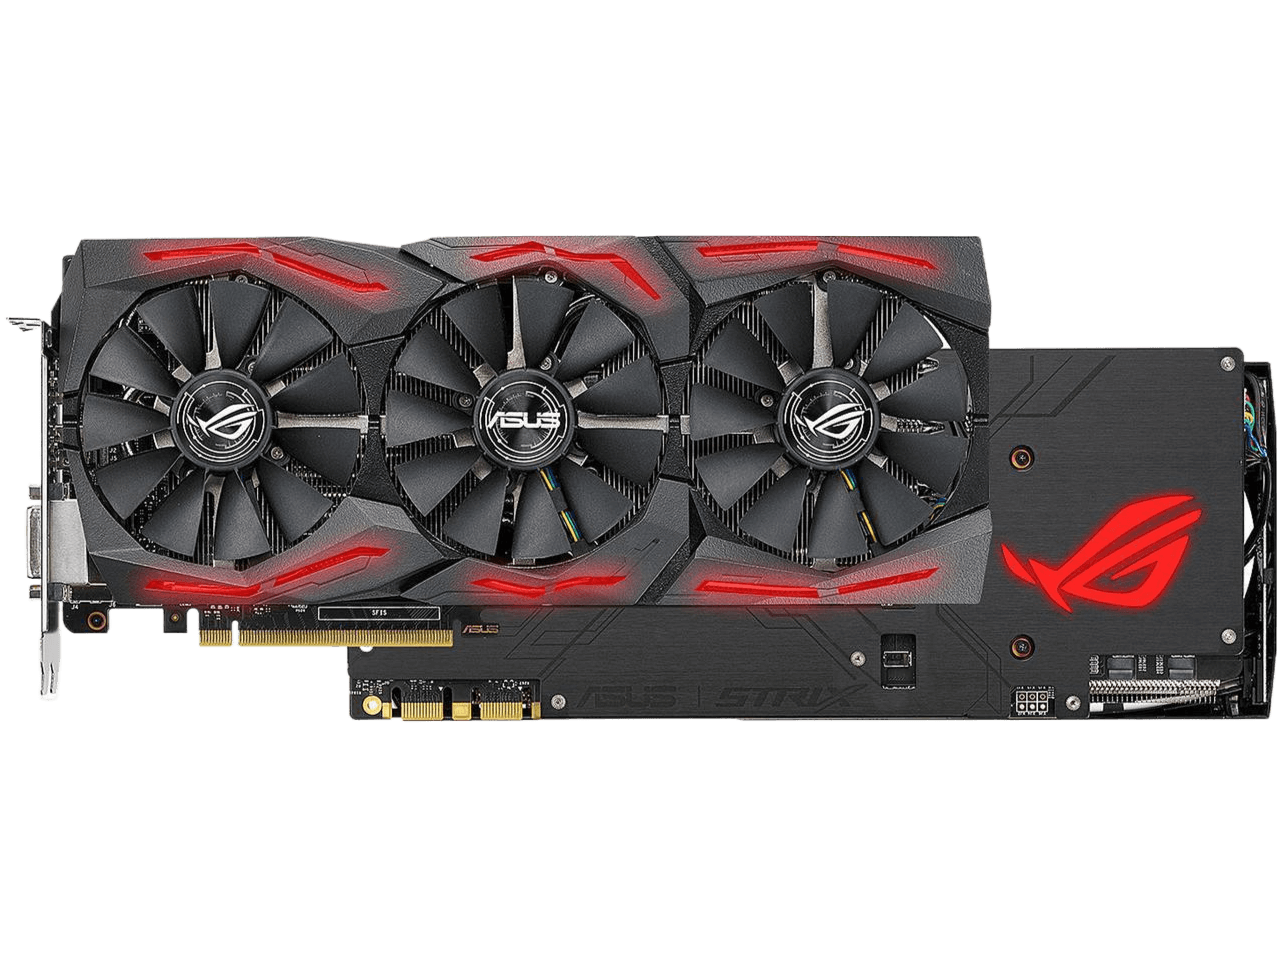 ASUS ROG STRIX AMD Radeon RX 5600 XT OC Edition Gaming Graphics